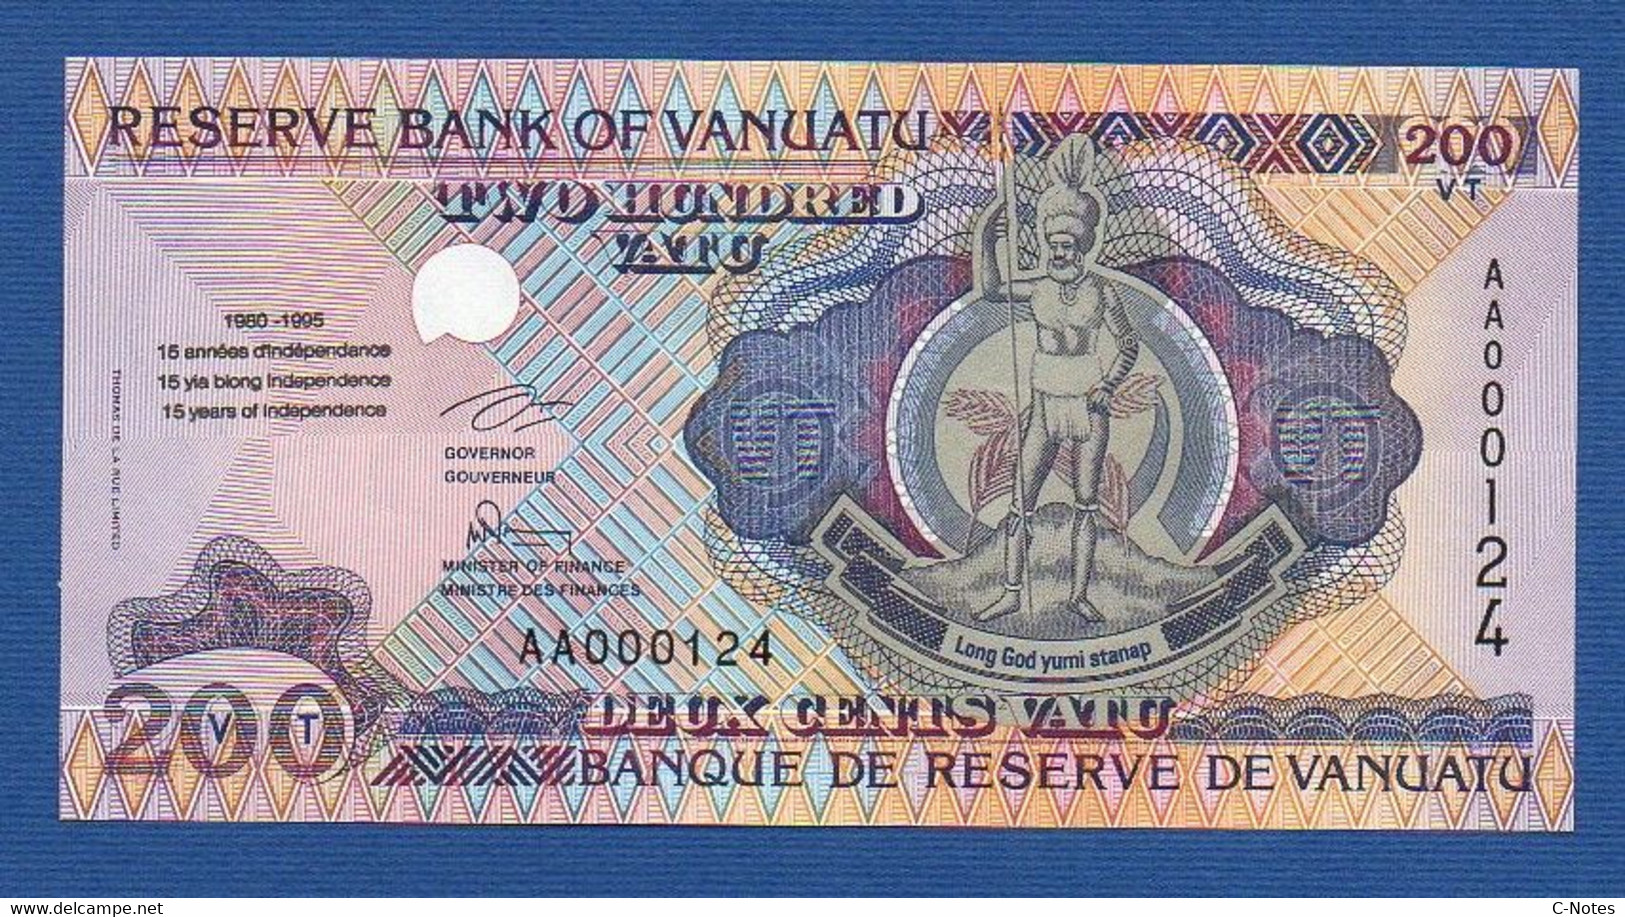 VANUATU - P. 9 – 200 VATU  ND (1995), UNC, Prefix AA 000124 - LOW SERIAL NUMBER - Commemorative Issue - Vanuatu